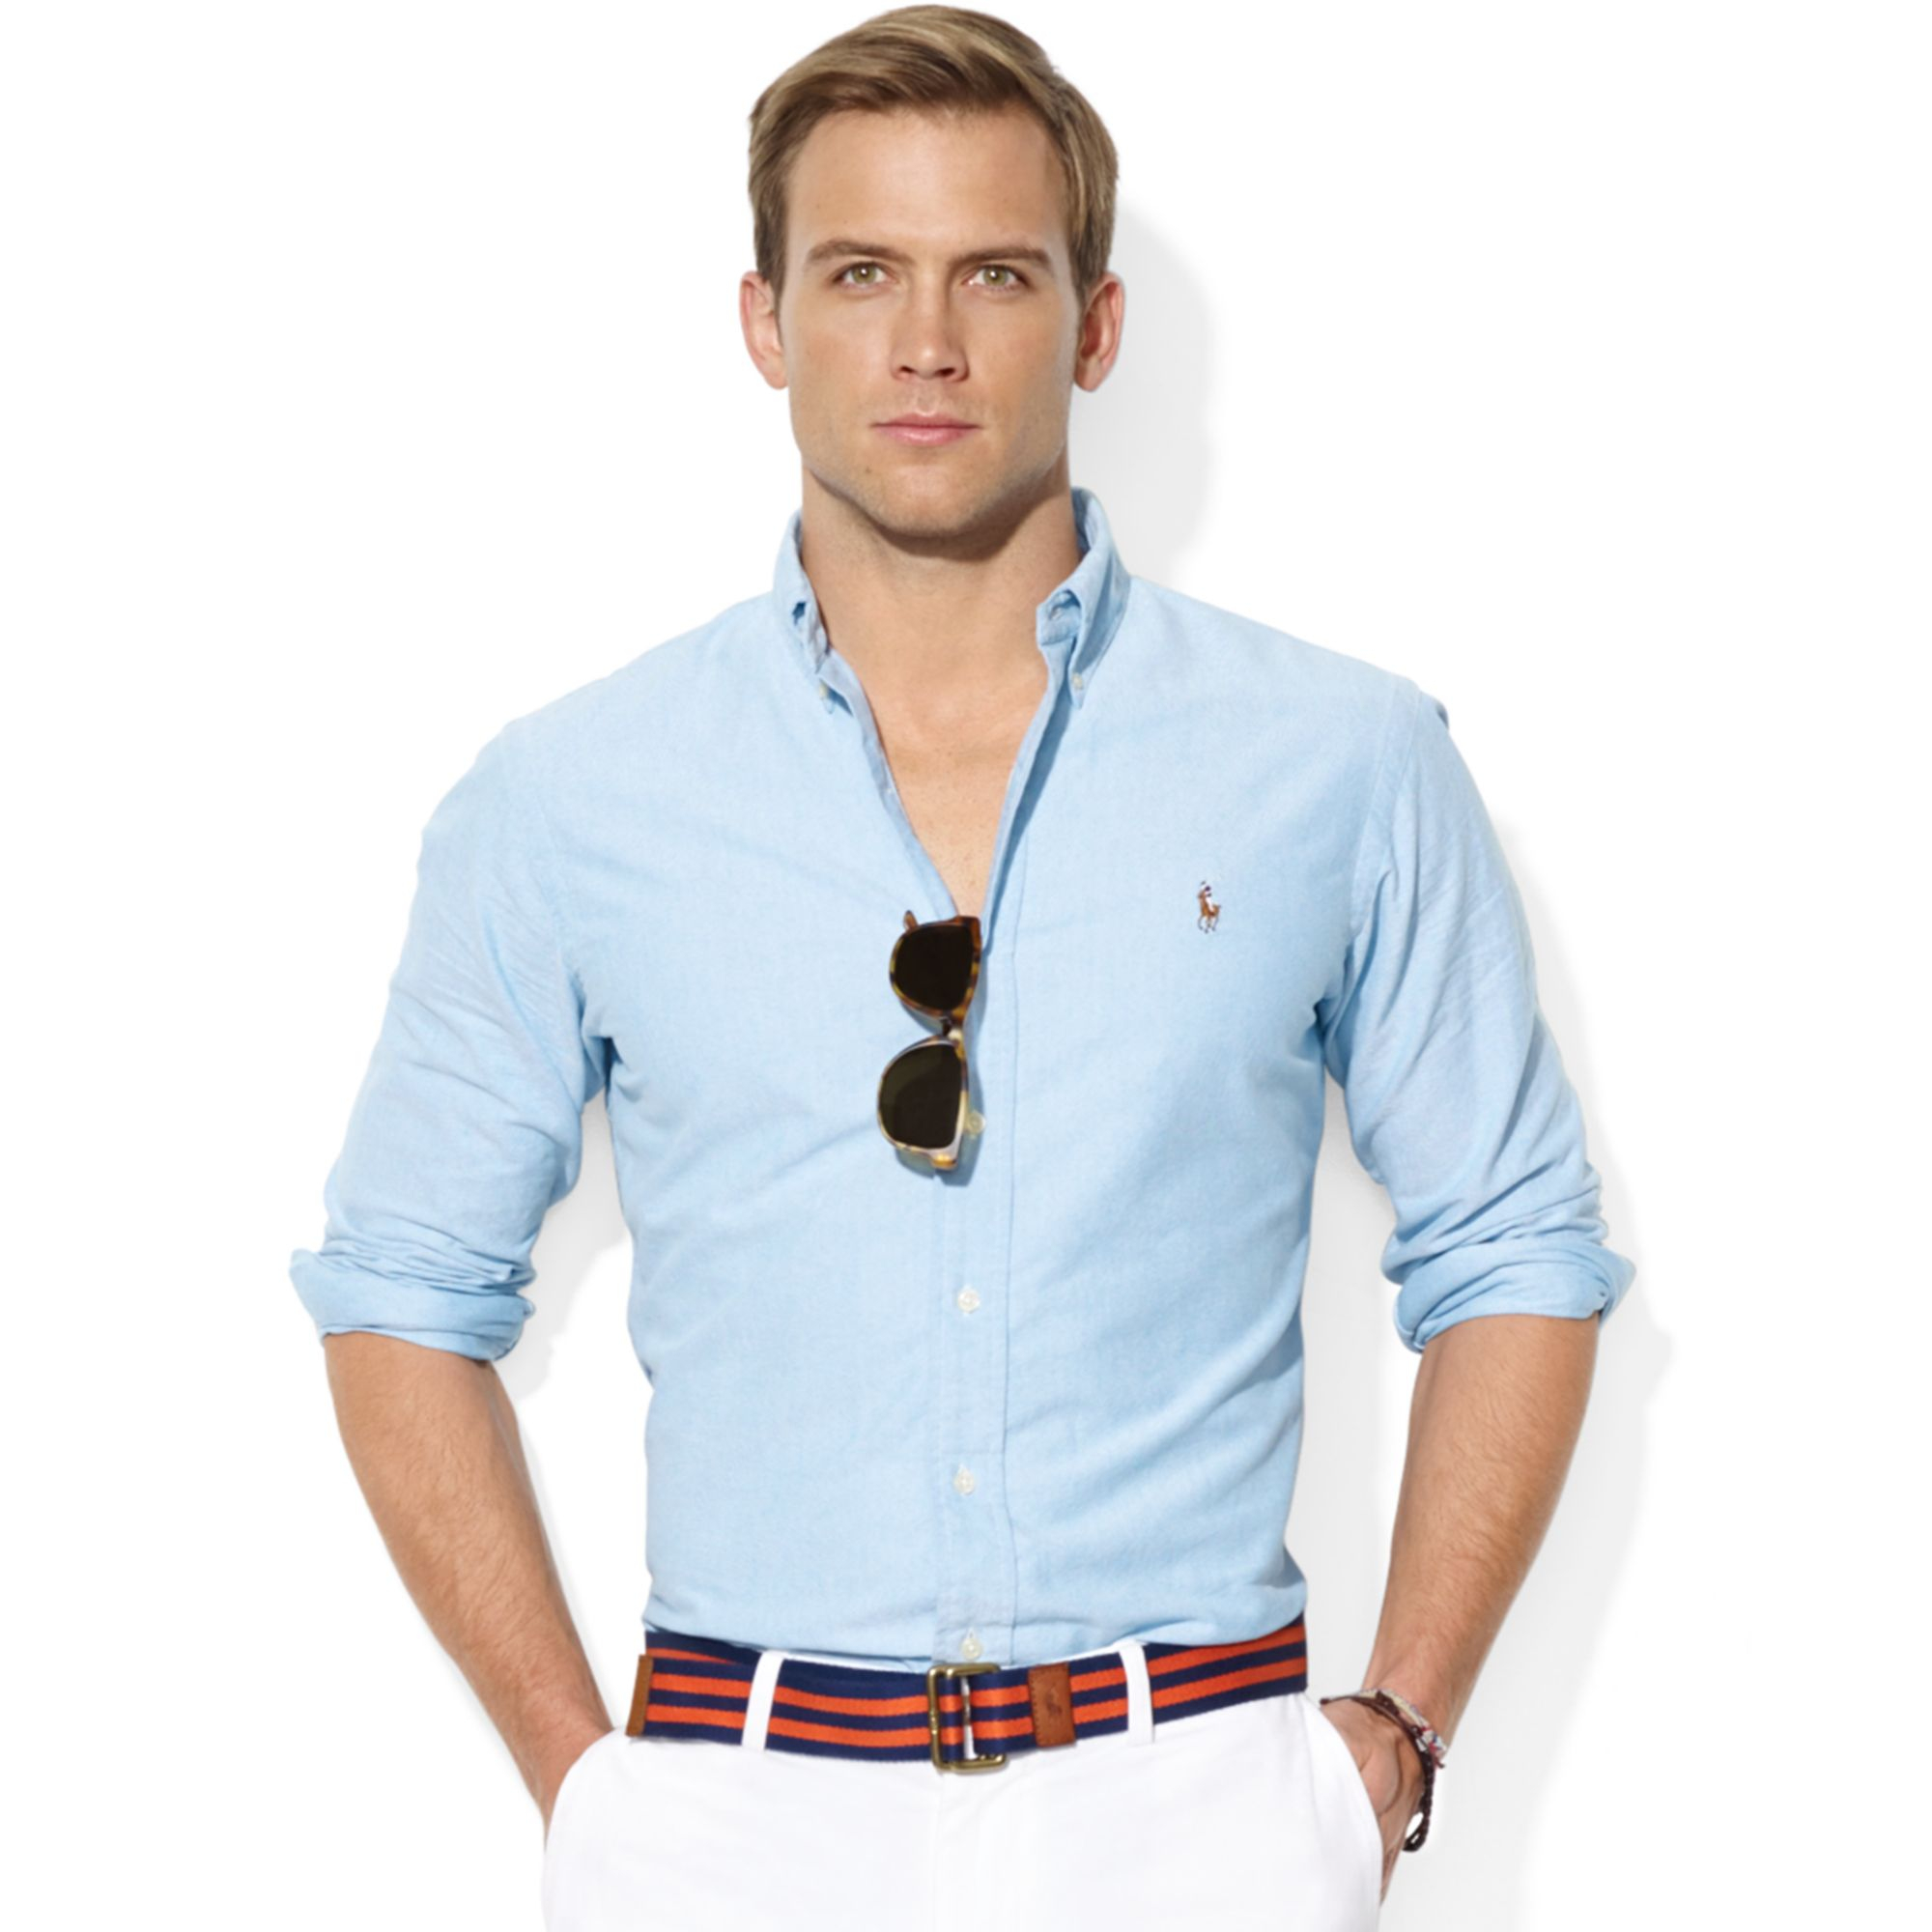 Ralph Lauren Polo Classicfit Solid Oxford Sport Shirt in Blue for Men